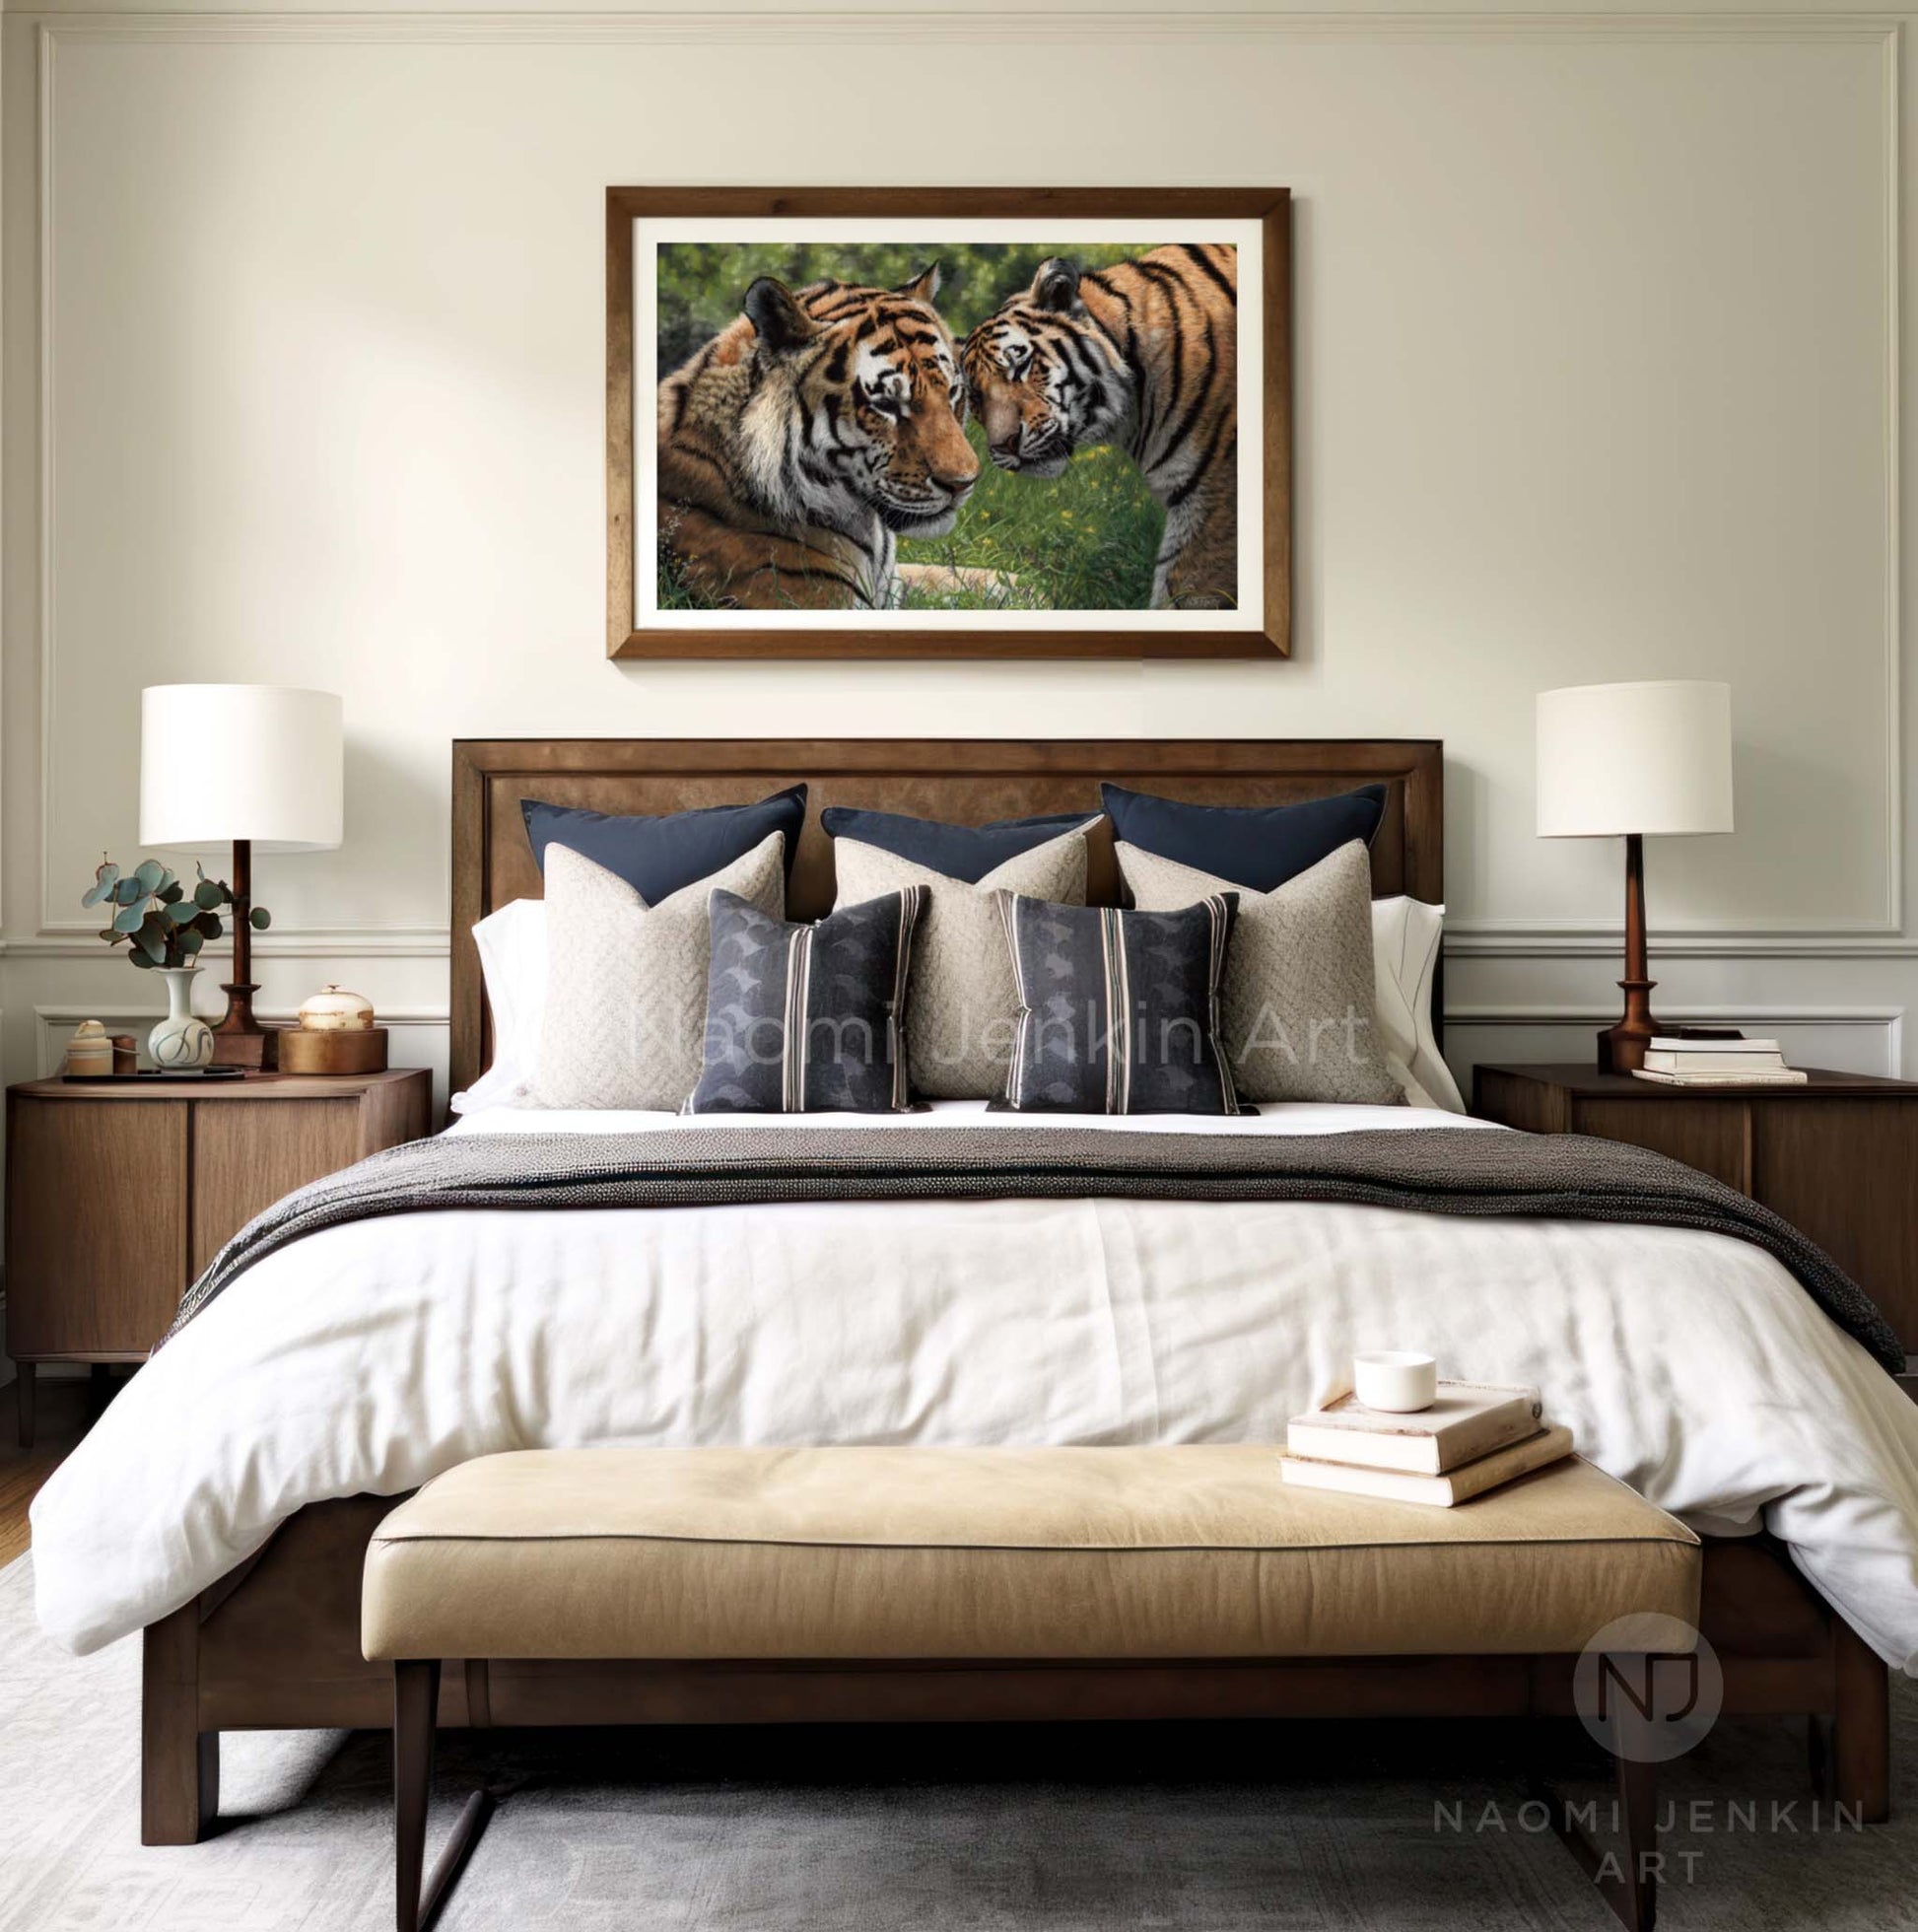 Framed tiger art print "Allegiance" in a bedroom setting by Naomi Jenkin Art